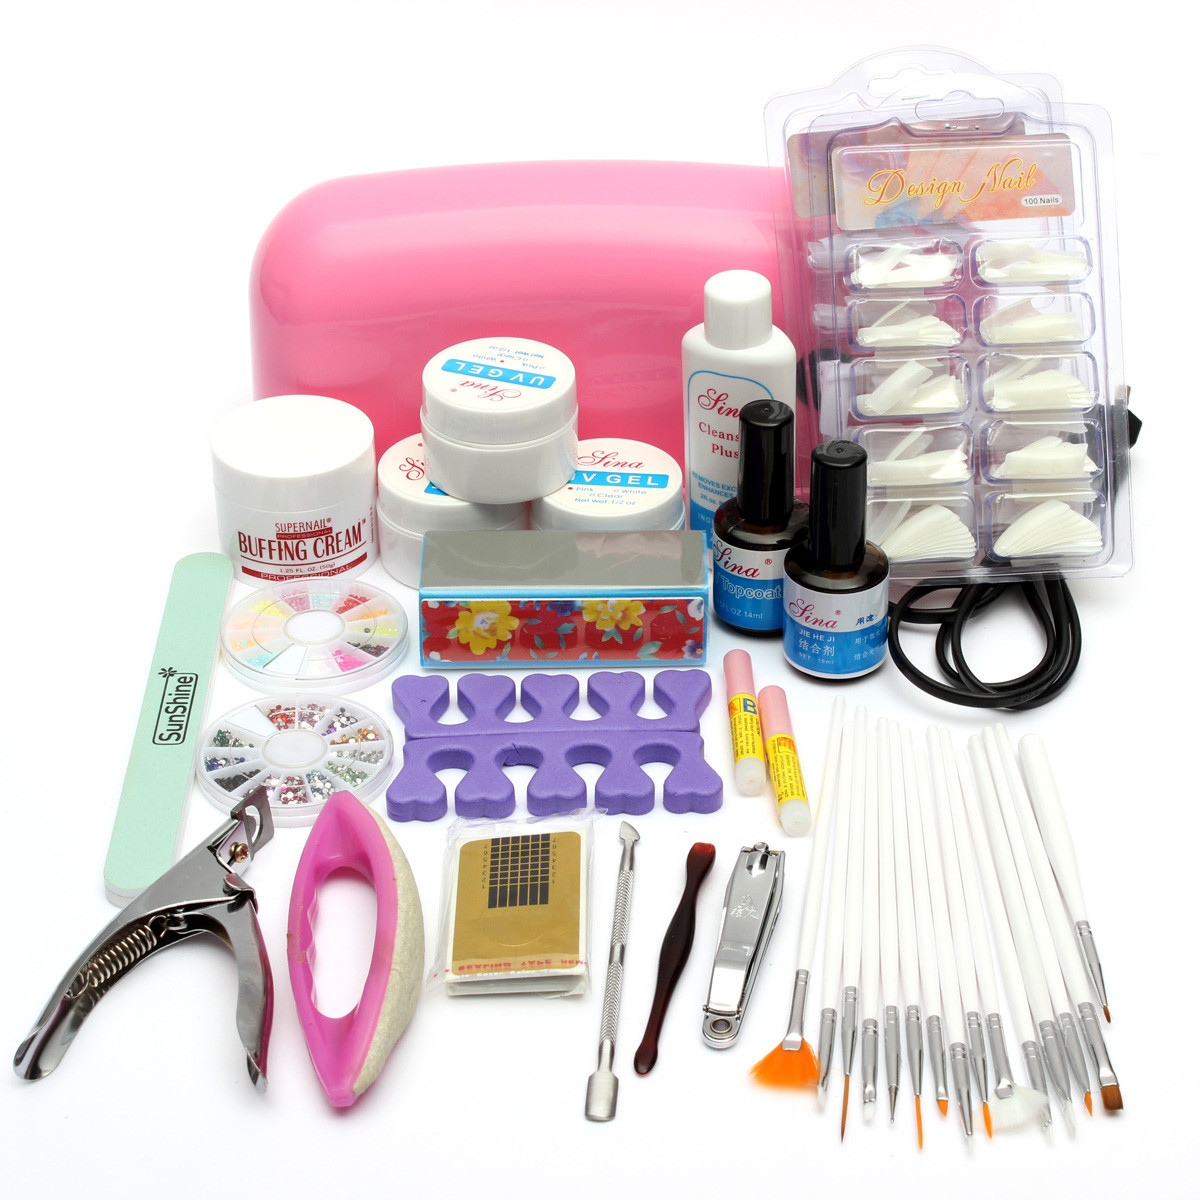 Best ideas about DIY Acrylic Nail Kits
. Save or Pin Acrylic Powder Nail Art Kit UV Gel UV lamp Manicure DIY Now.